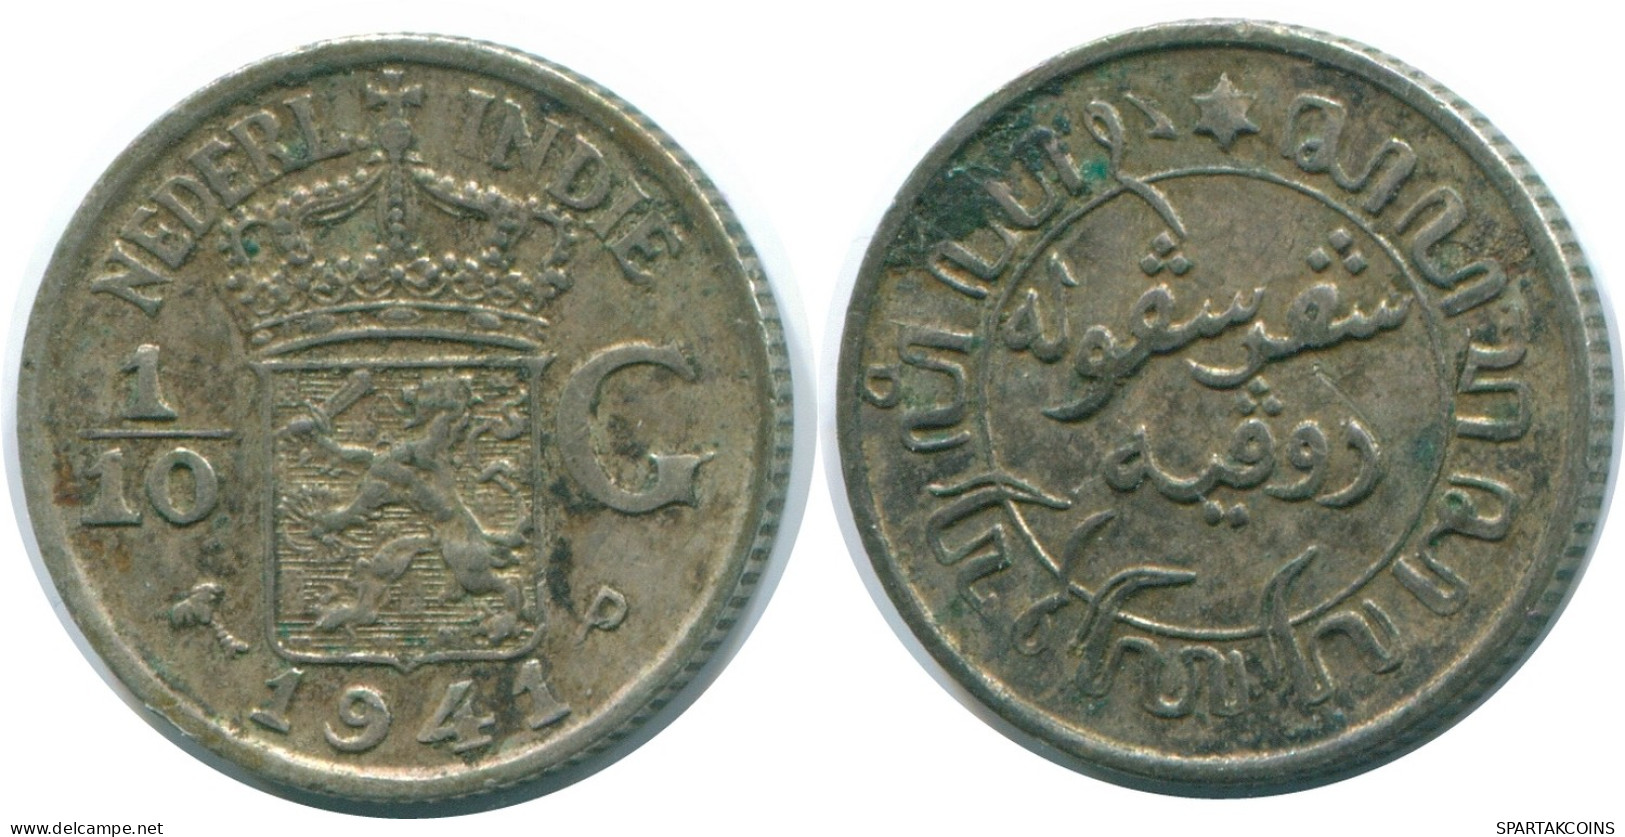 1/10 GULDEN 1941 P NETHERLANDS EAST INDIES SILVER Colonial Coin #NL13827.3.U - Indes Néerlandaises